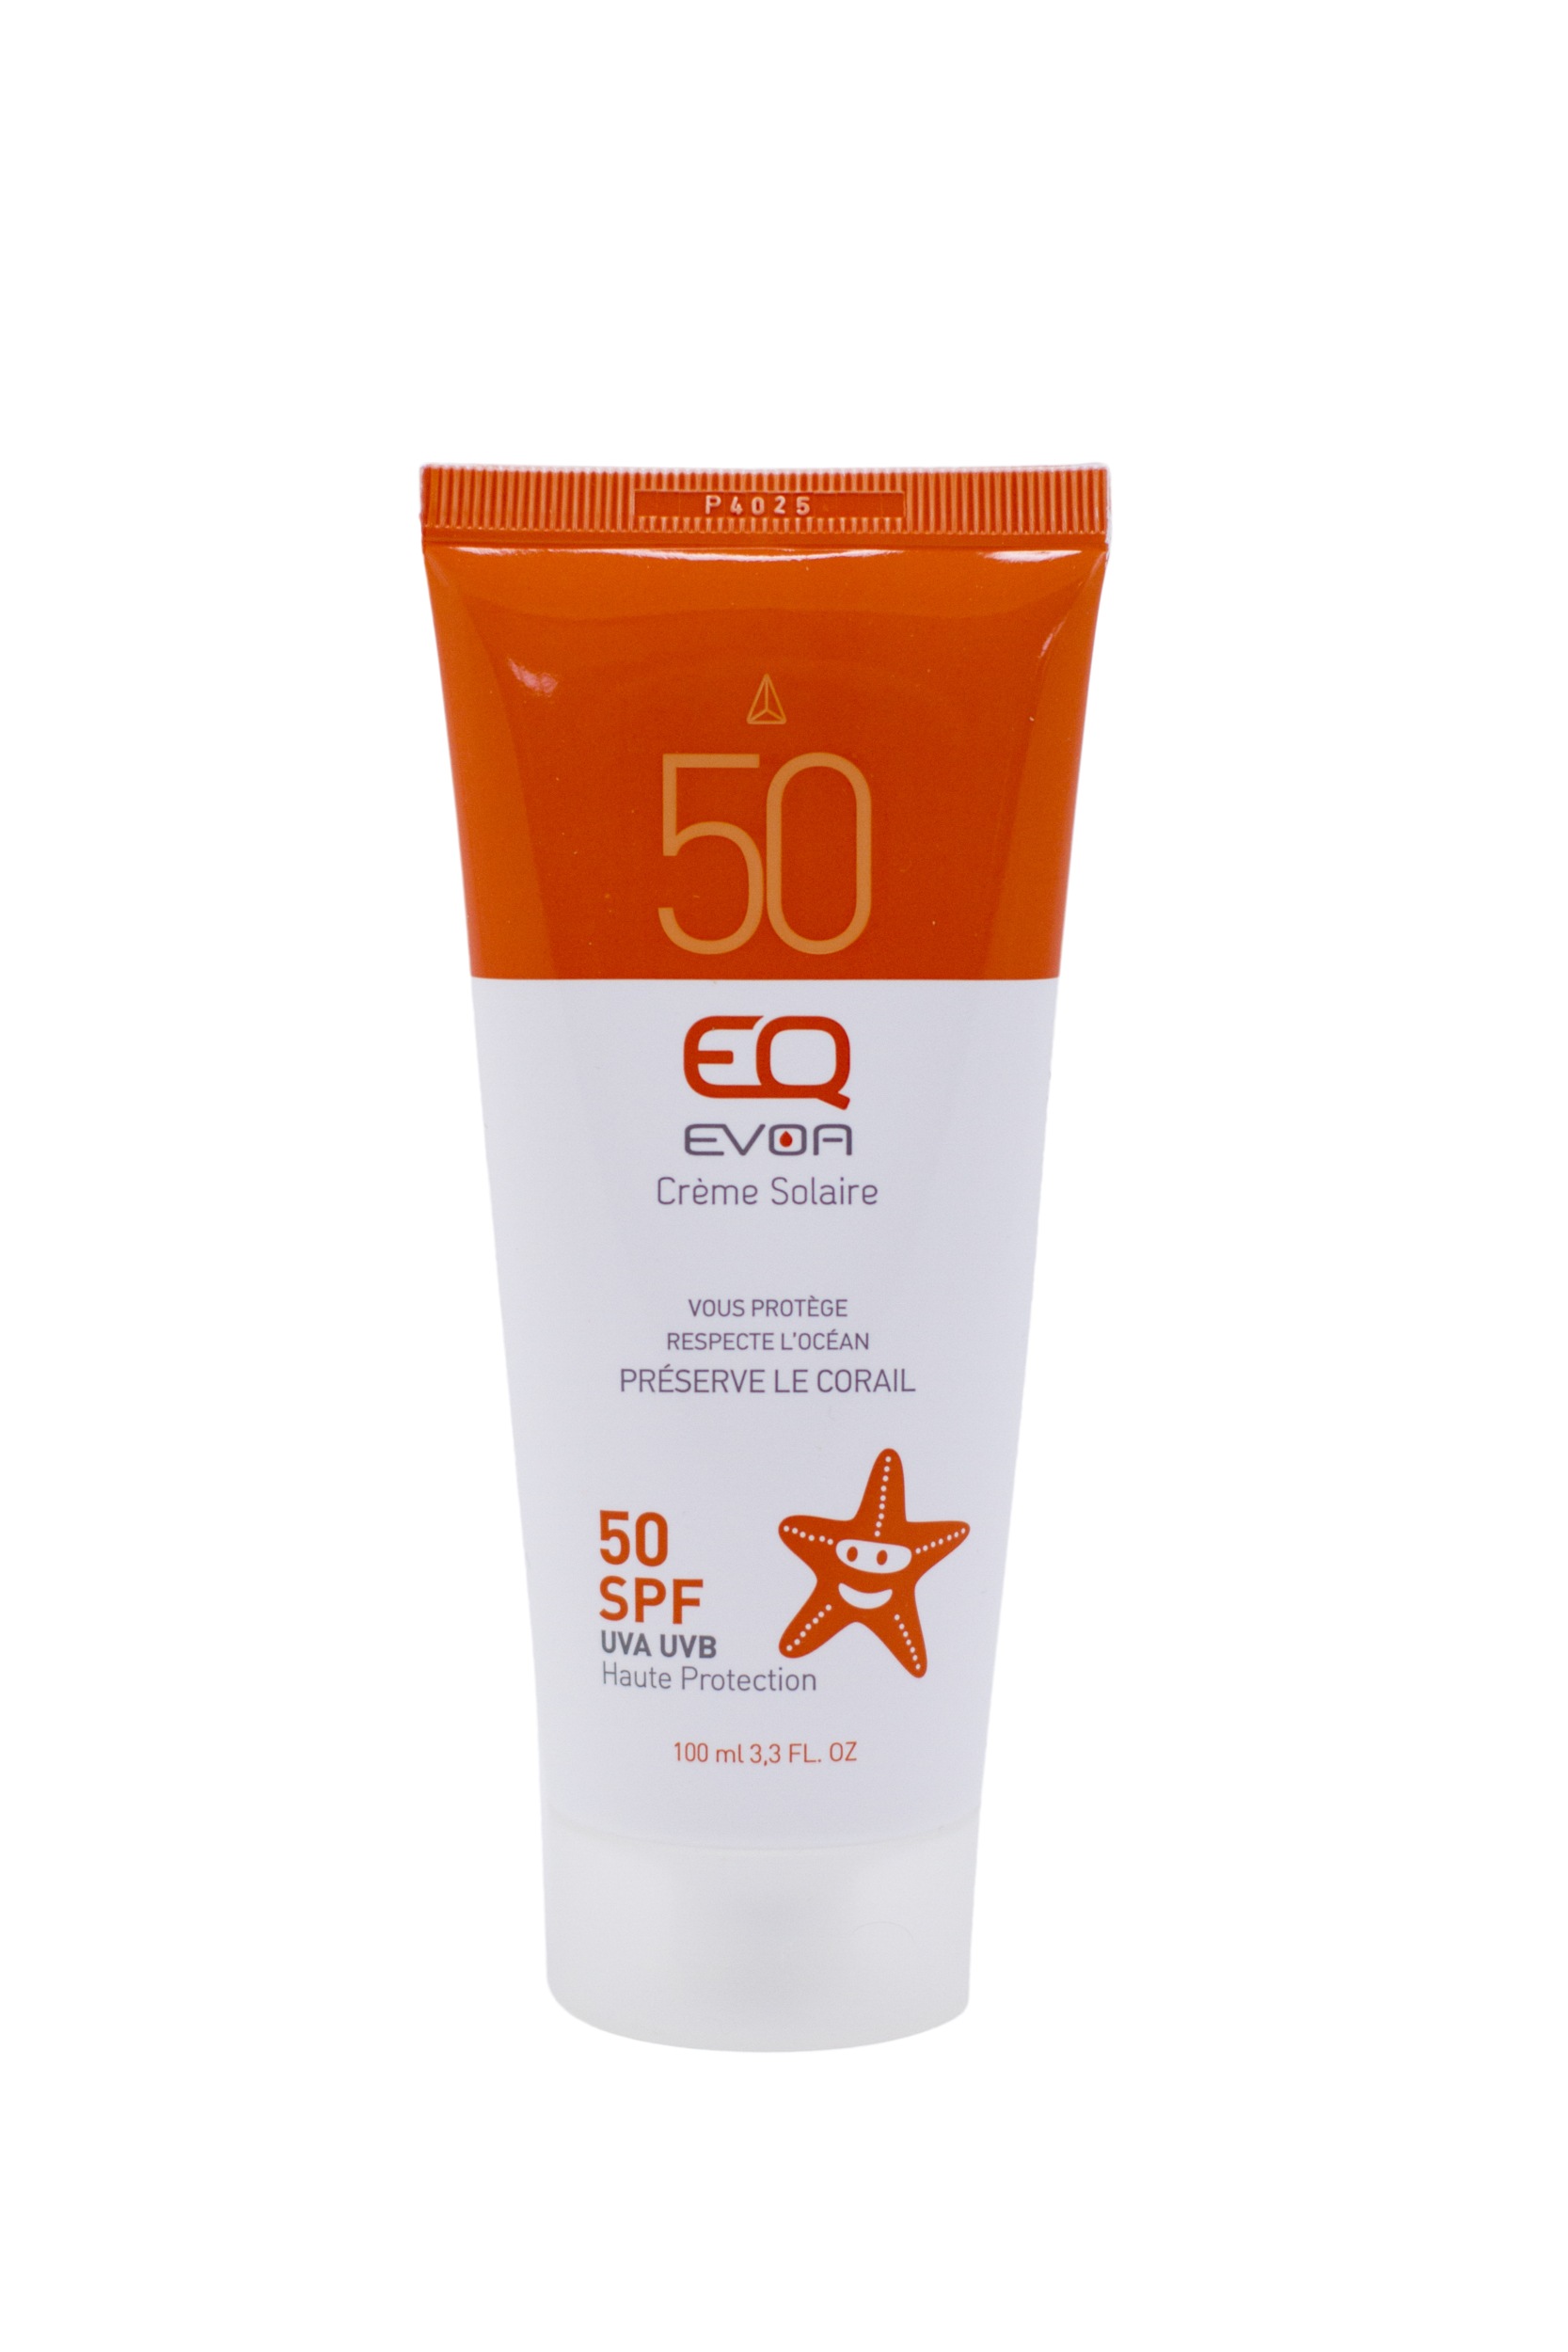 Doux Good - EQ Evoa solaire- Crème solaire SPF50 - 100ml